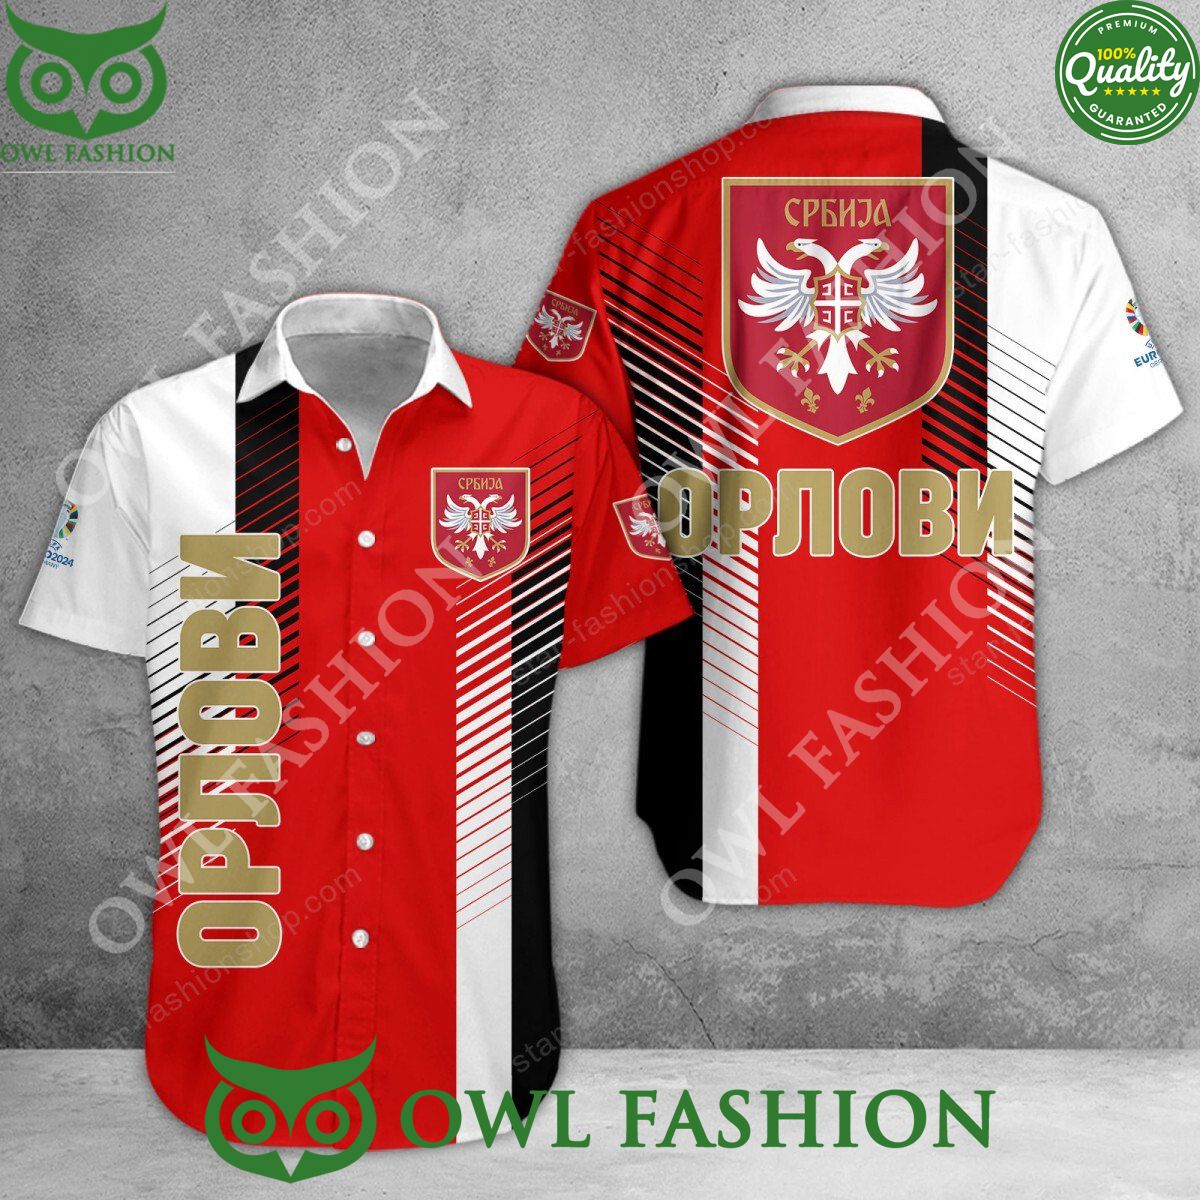 serbia national football team logo black red white 3d shirt printed 10 xKSfn.jpg